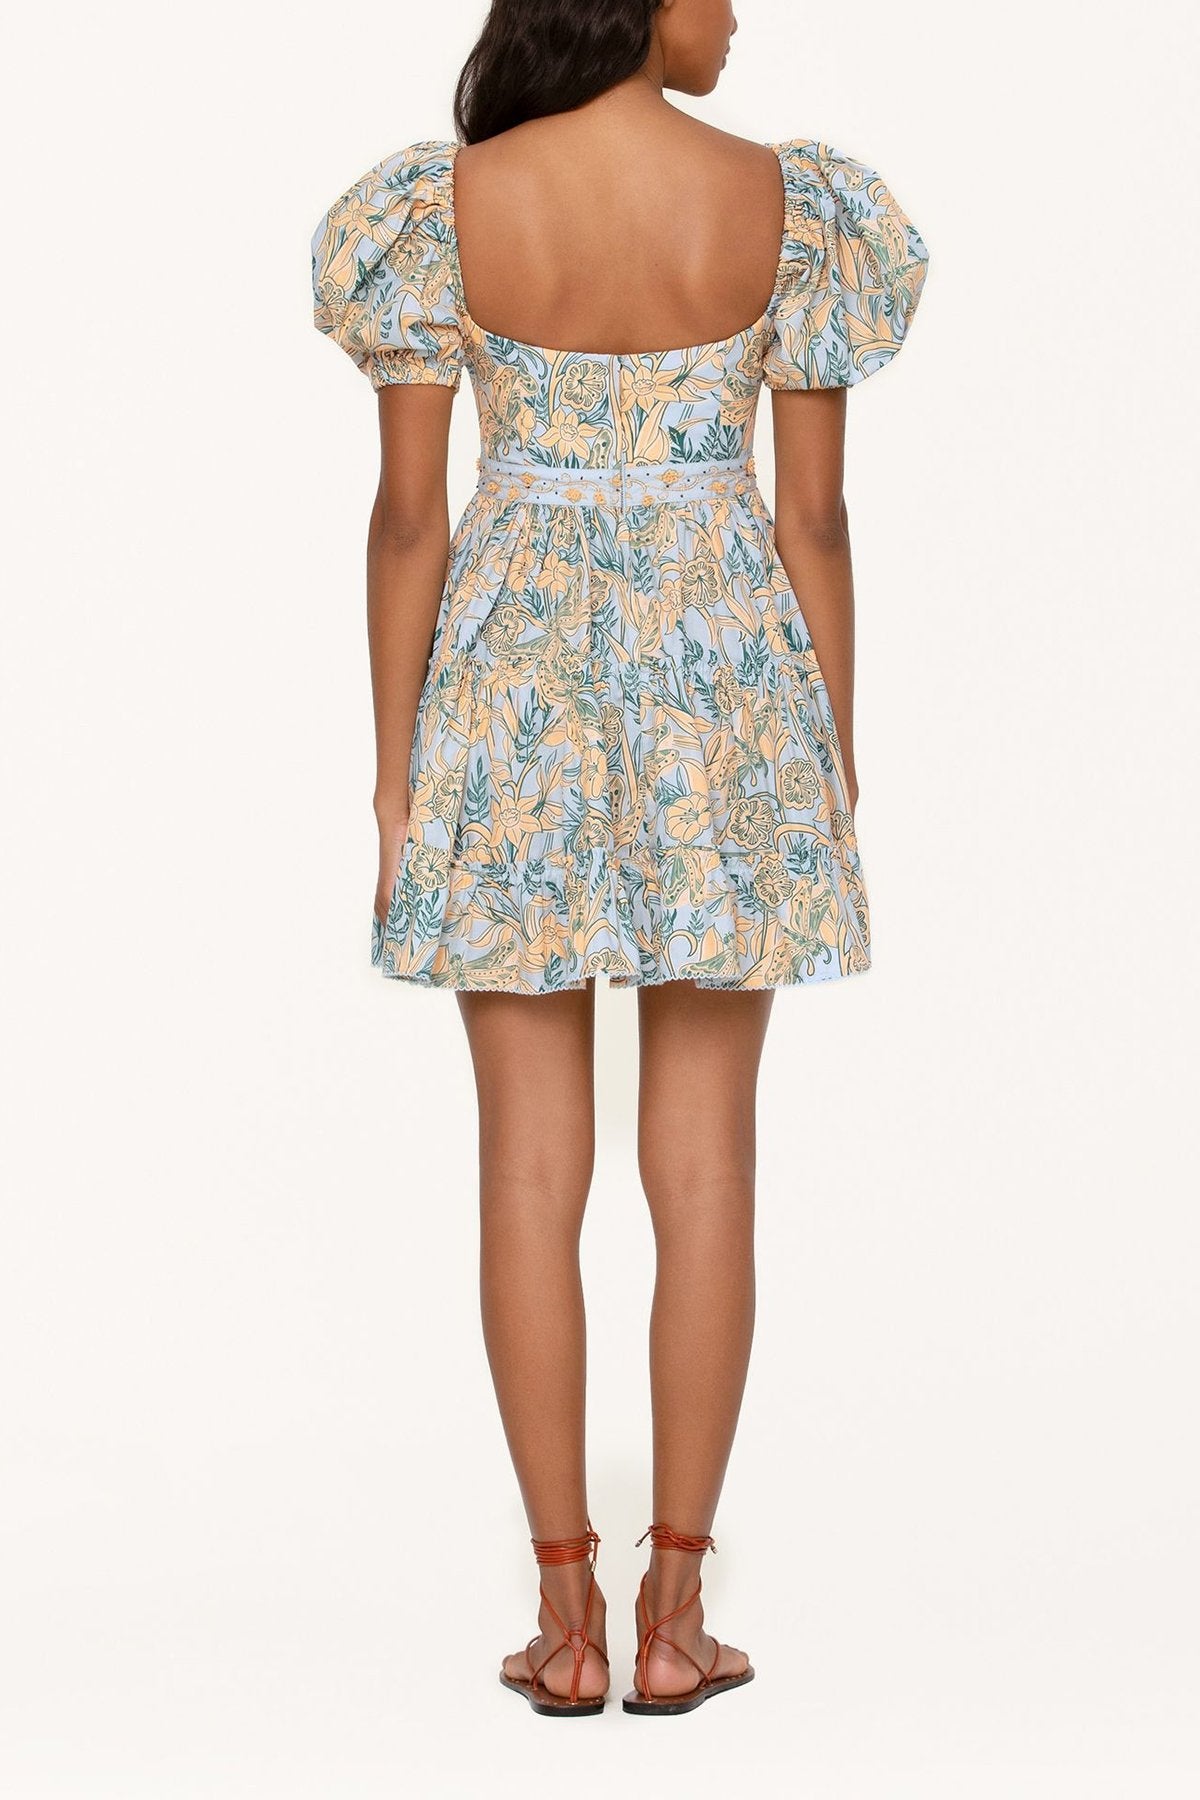 Manzanilla Vuelo Mini Dress in Día - shop-olivia.com